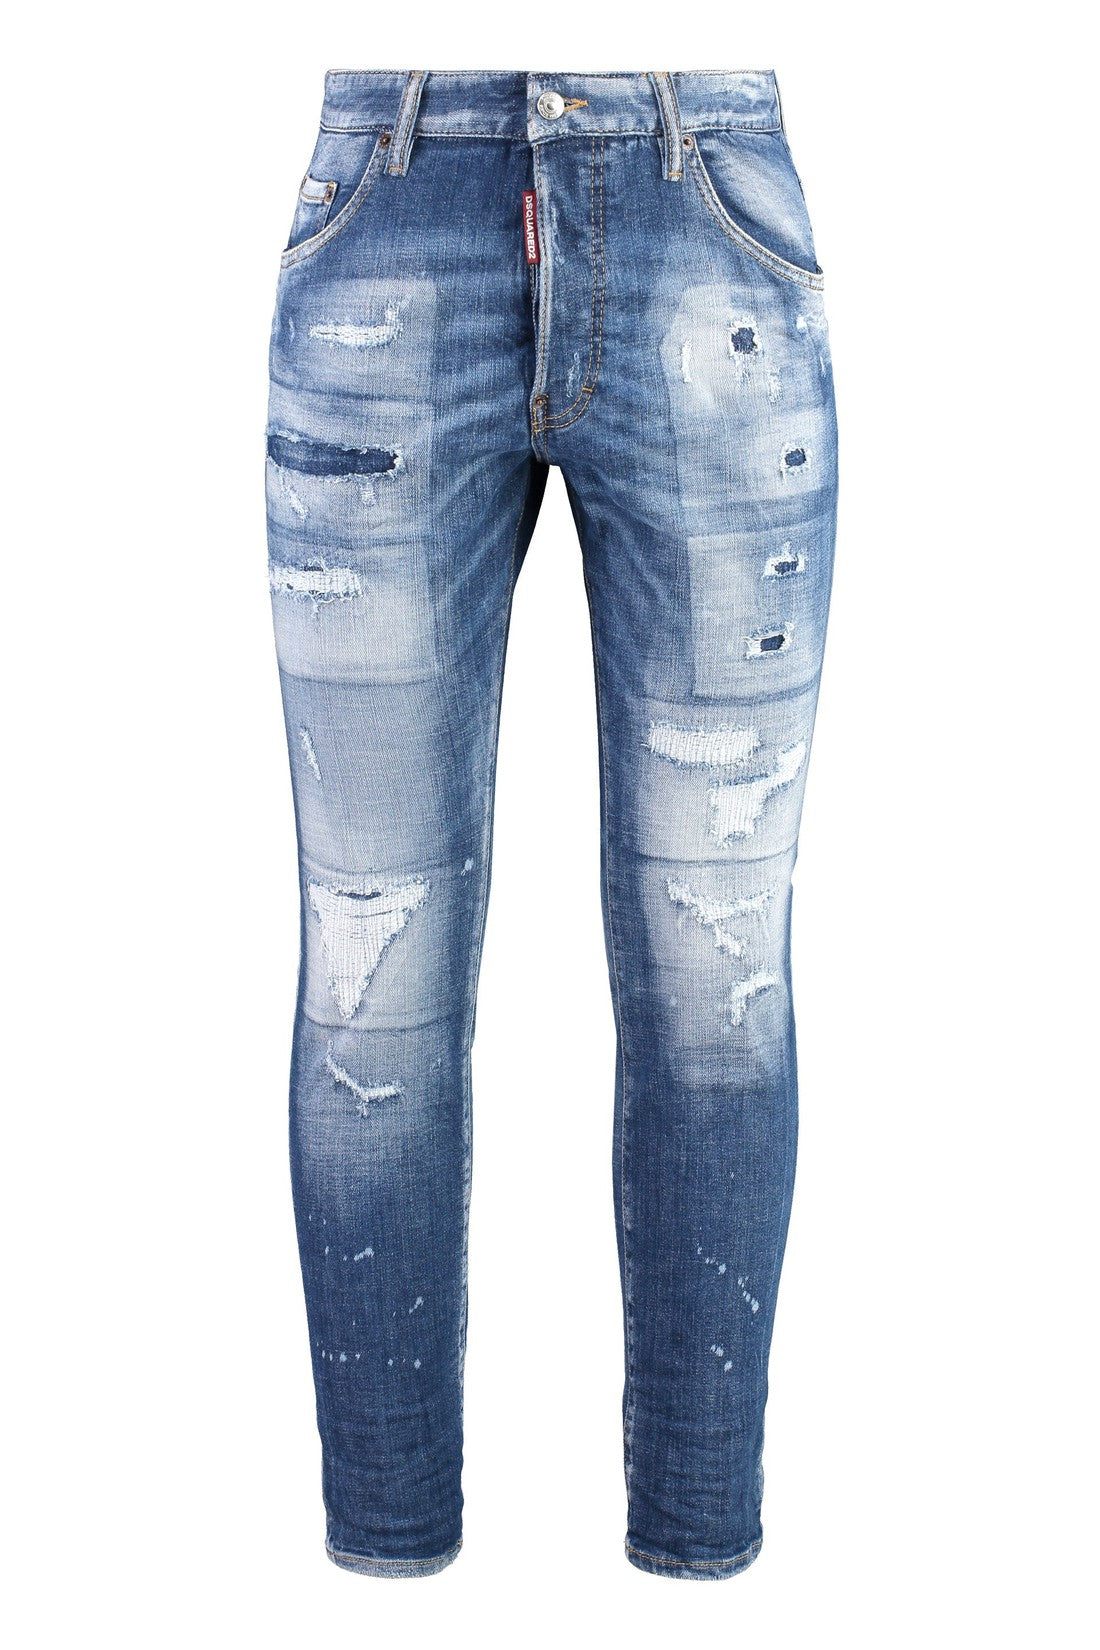 Dsquared2-OUTLET-SALE-Destroyed slim fit jeans-ARCHIVIST